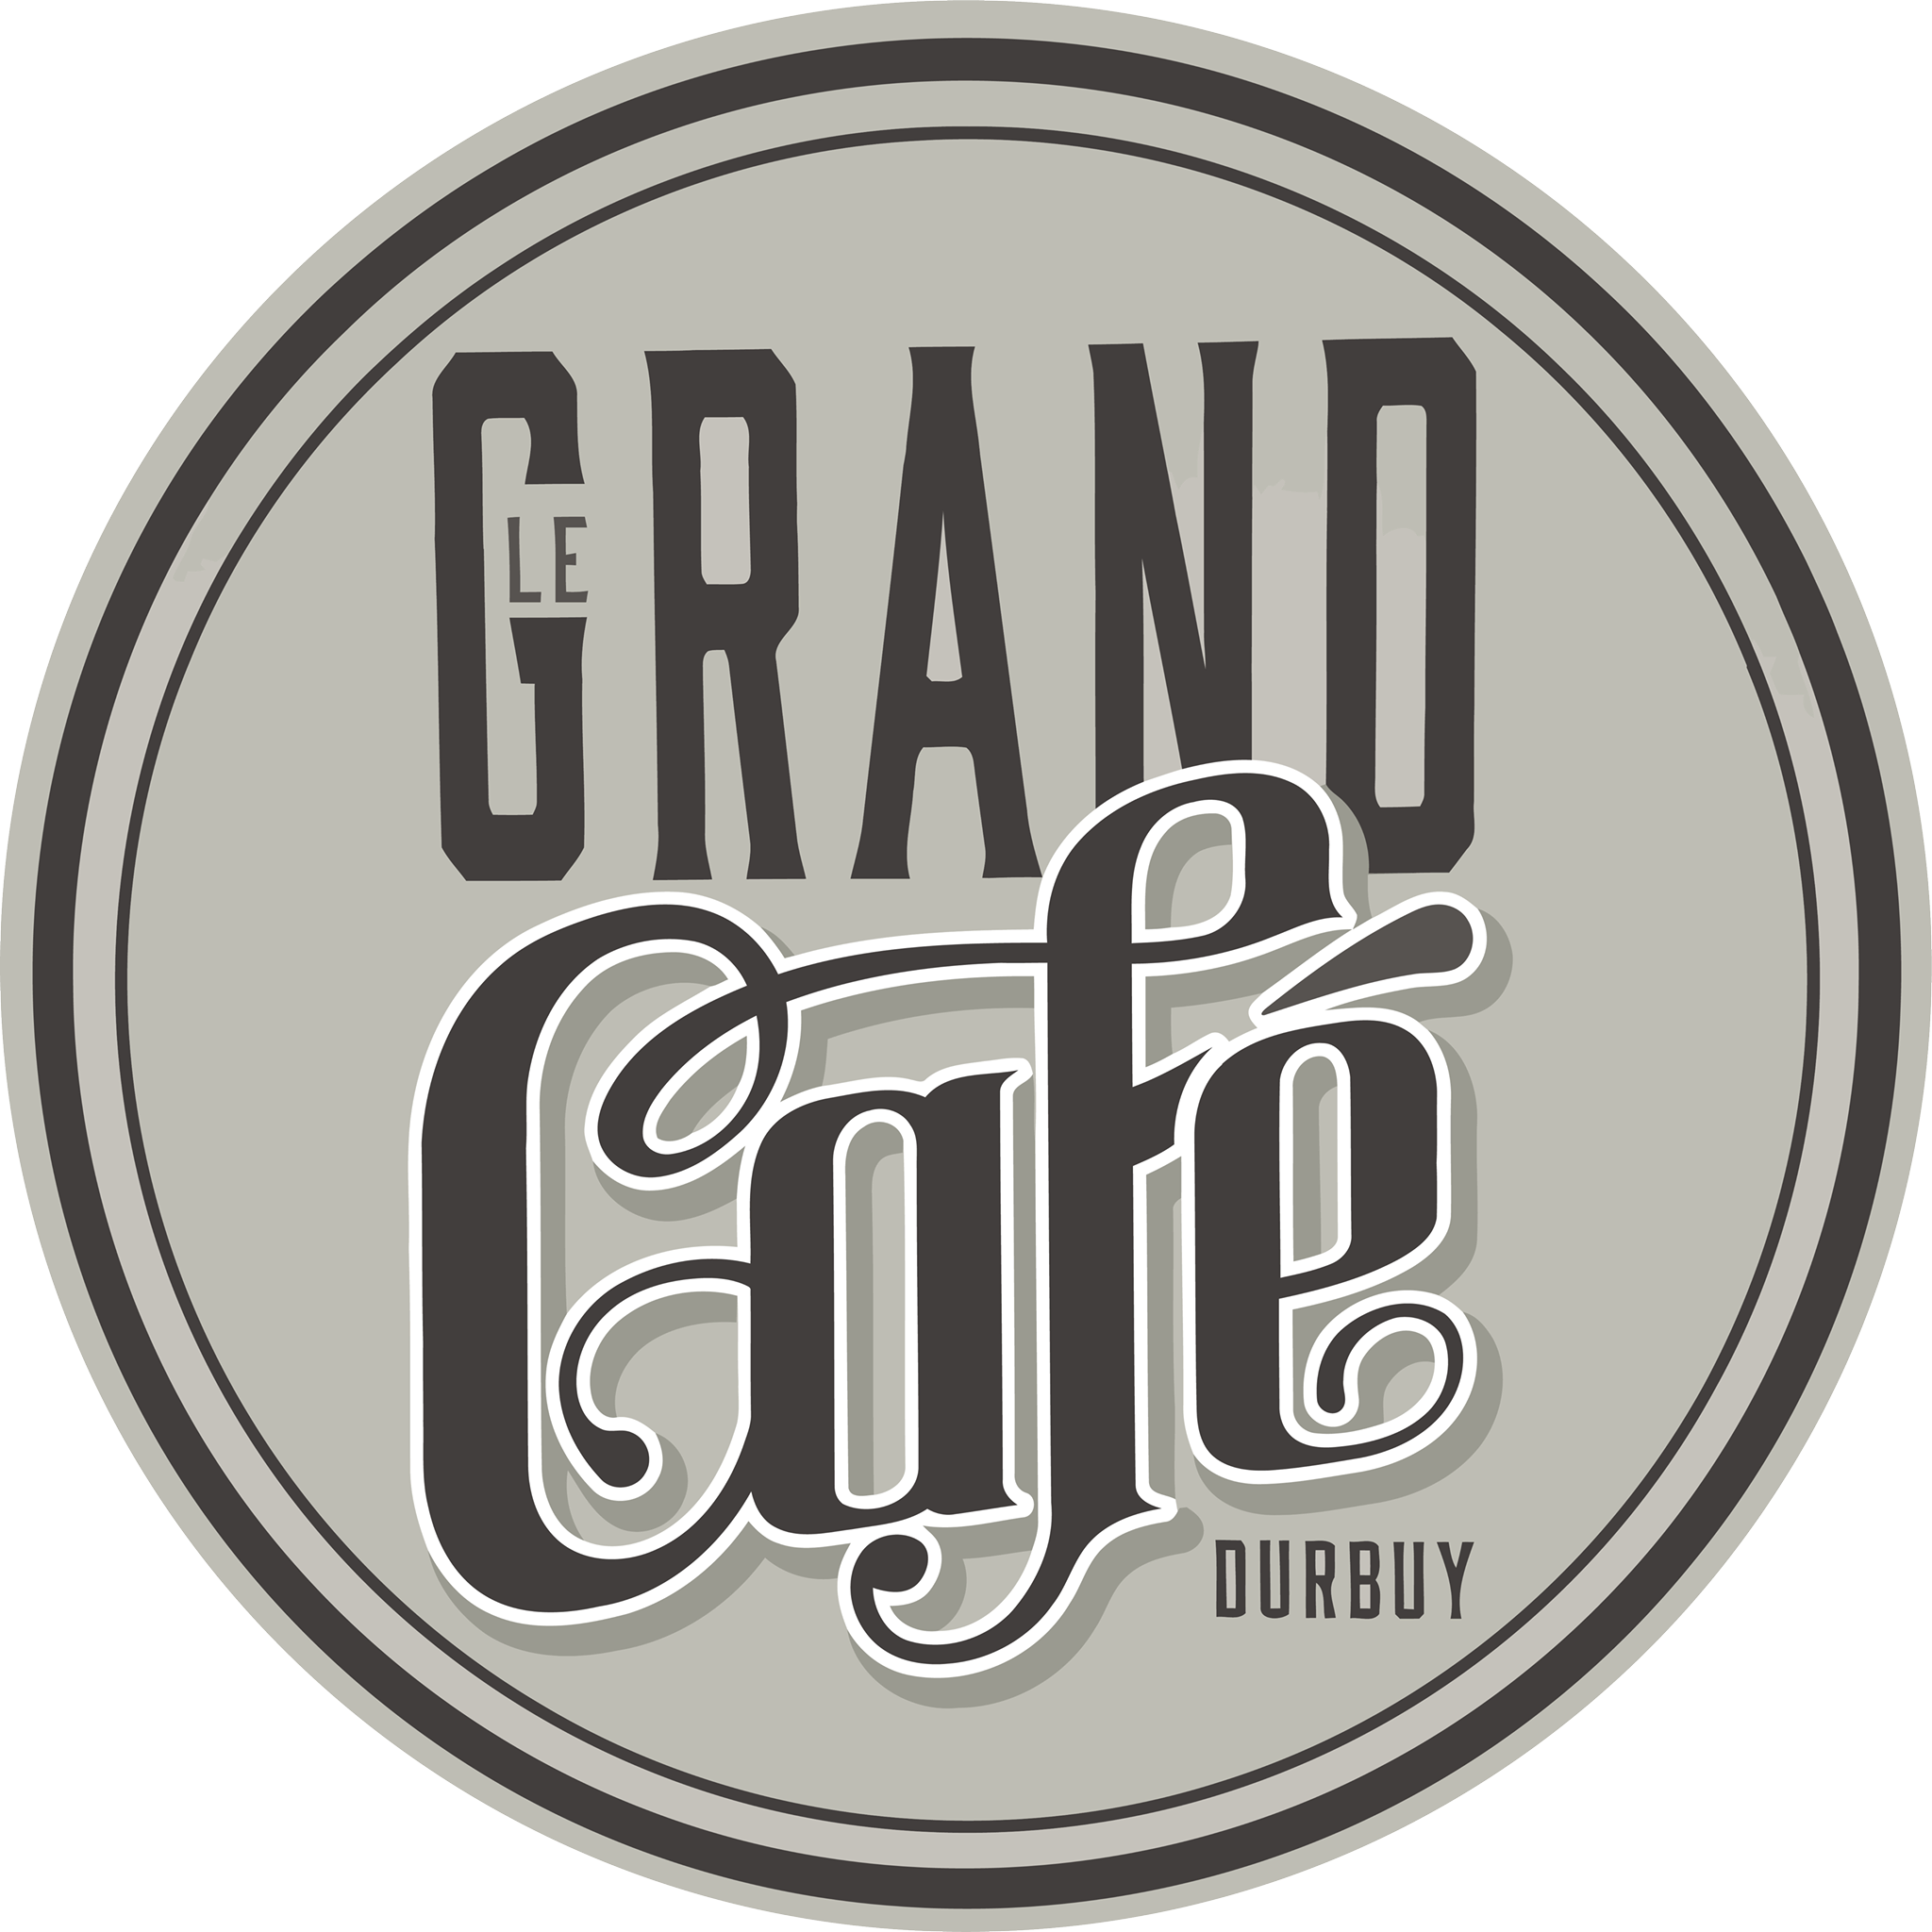 Le Grand Café Durbuy